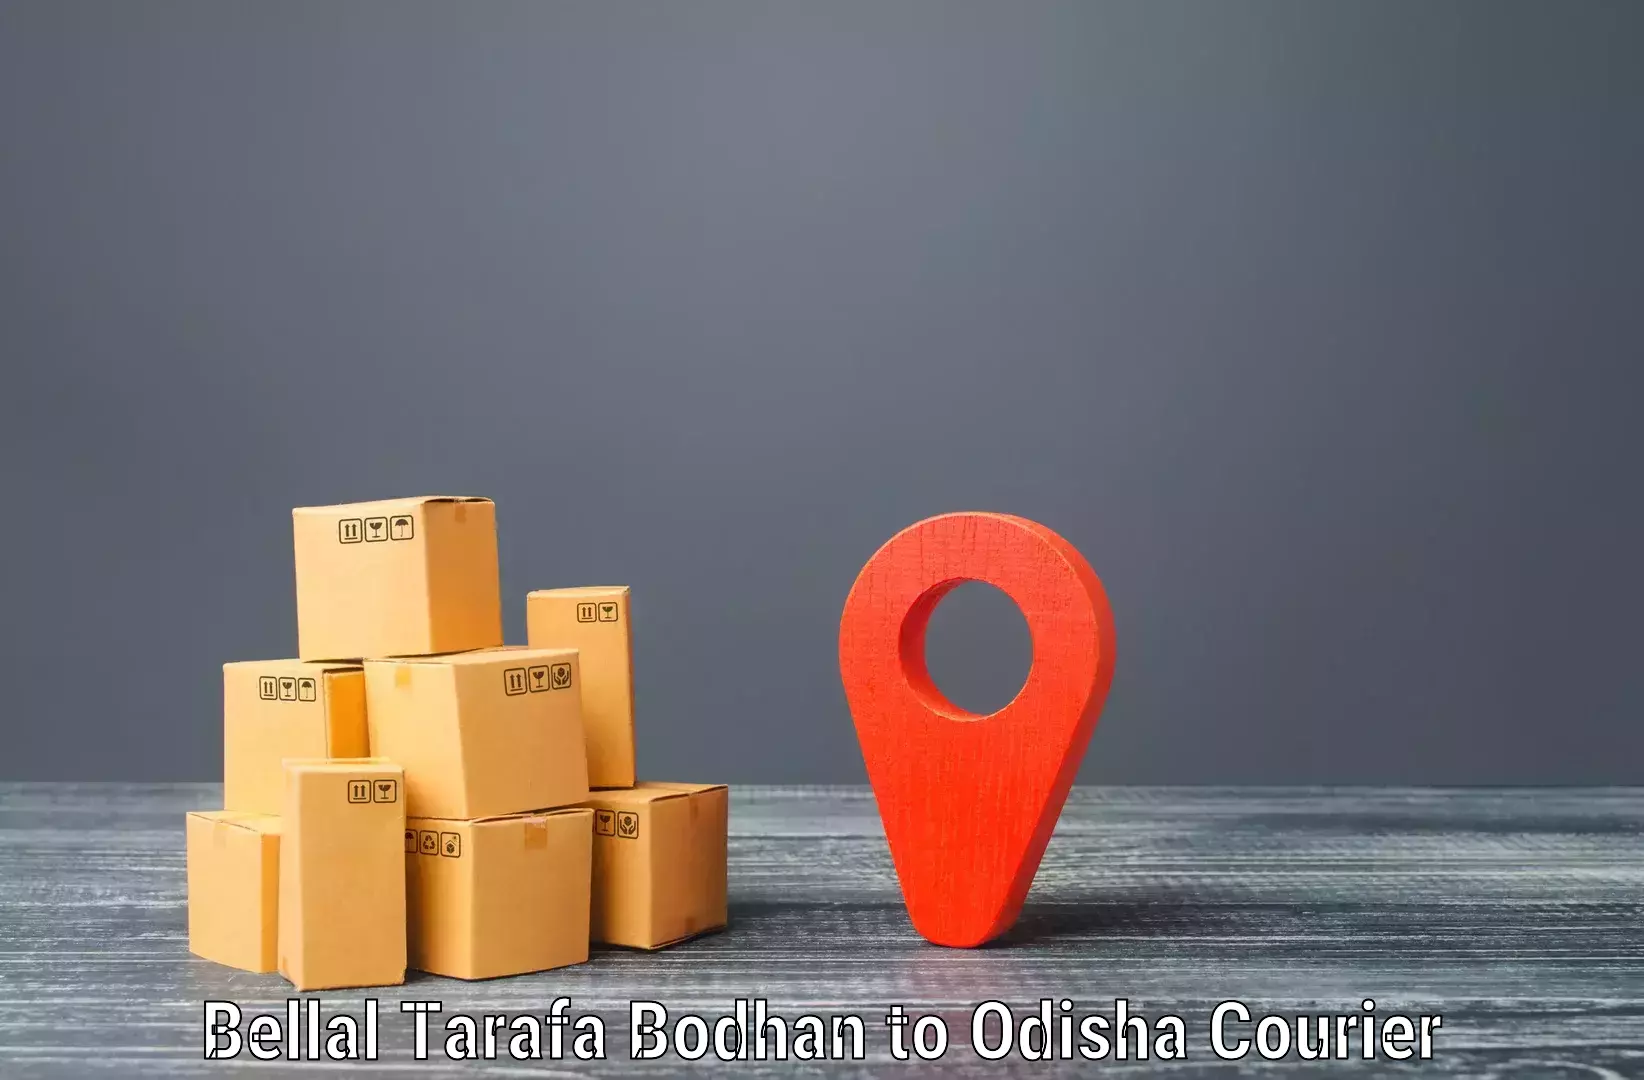 Secure freight services in Bellal Tarafa Bodhan to Sohela